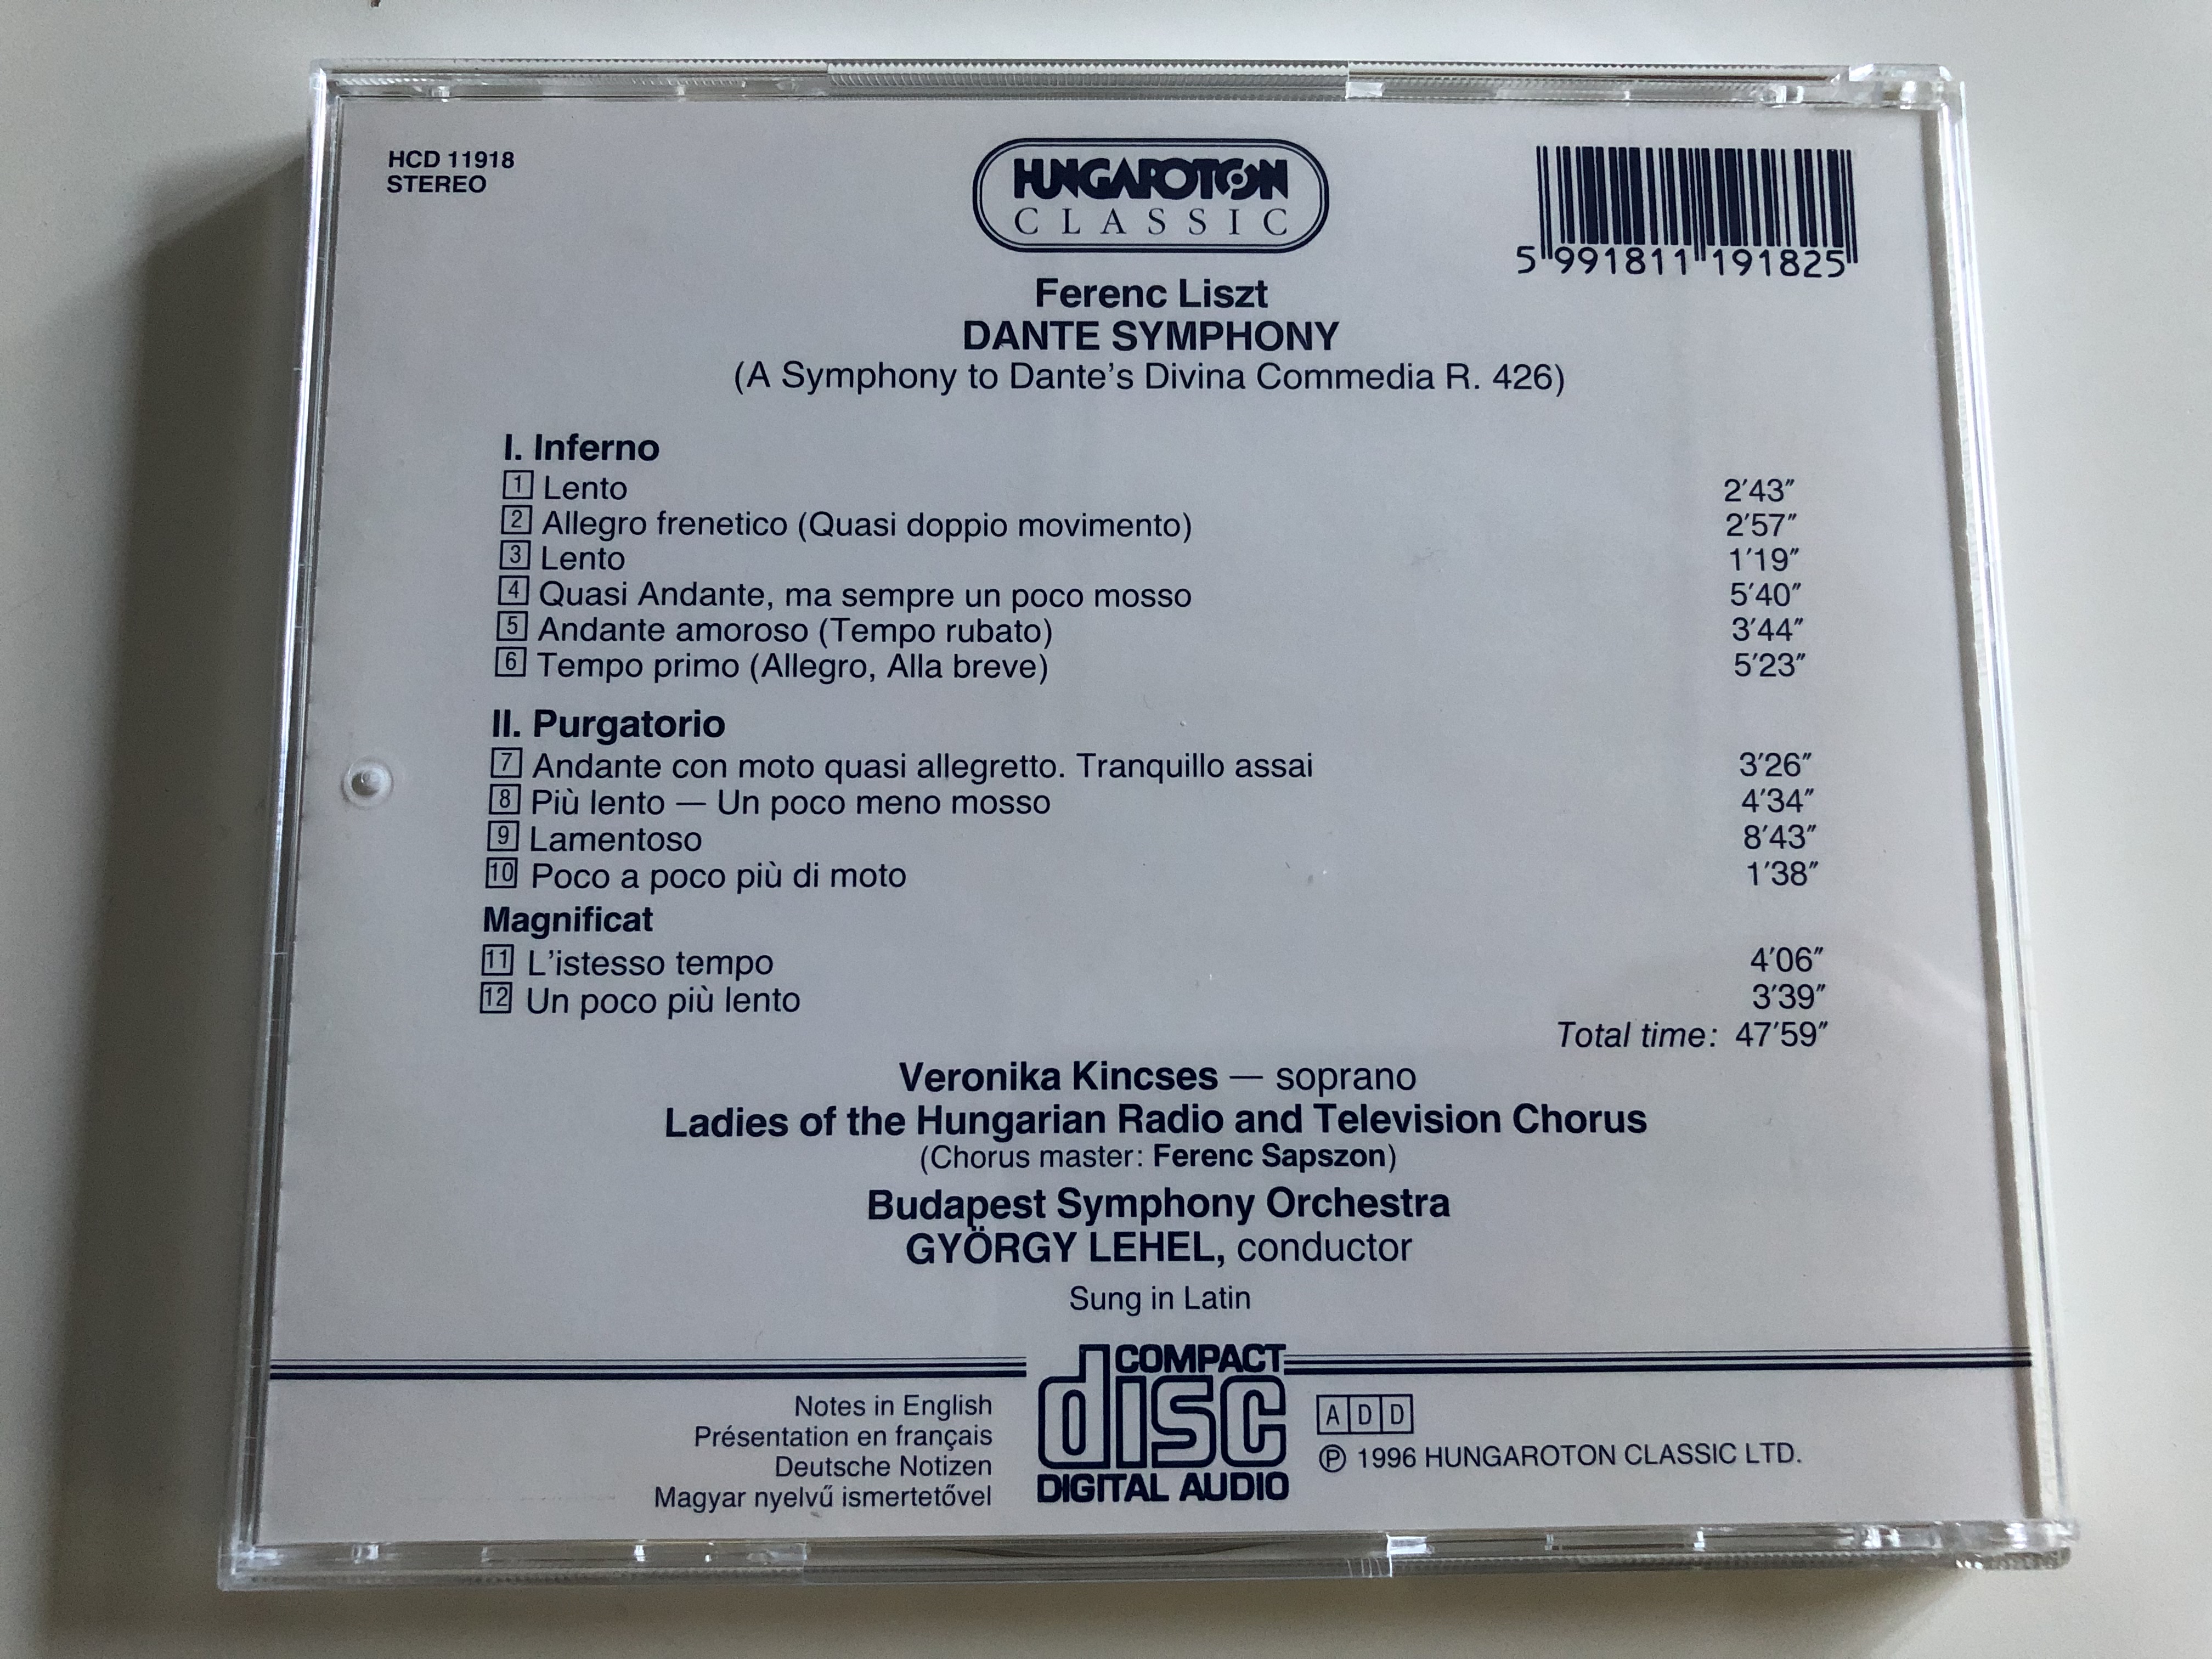 liszt-ferenc-dante-symphony-audio-cd-1996-veronika-kincses-soprano-budapest-symphony-orchestra-conducted-by-gy-rgy-lehel-hungaroton-hcd-11918-6-.jpg